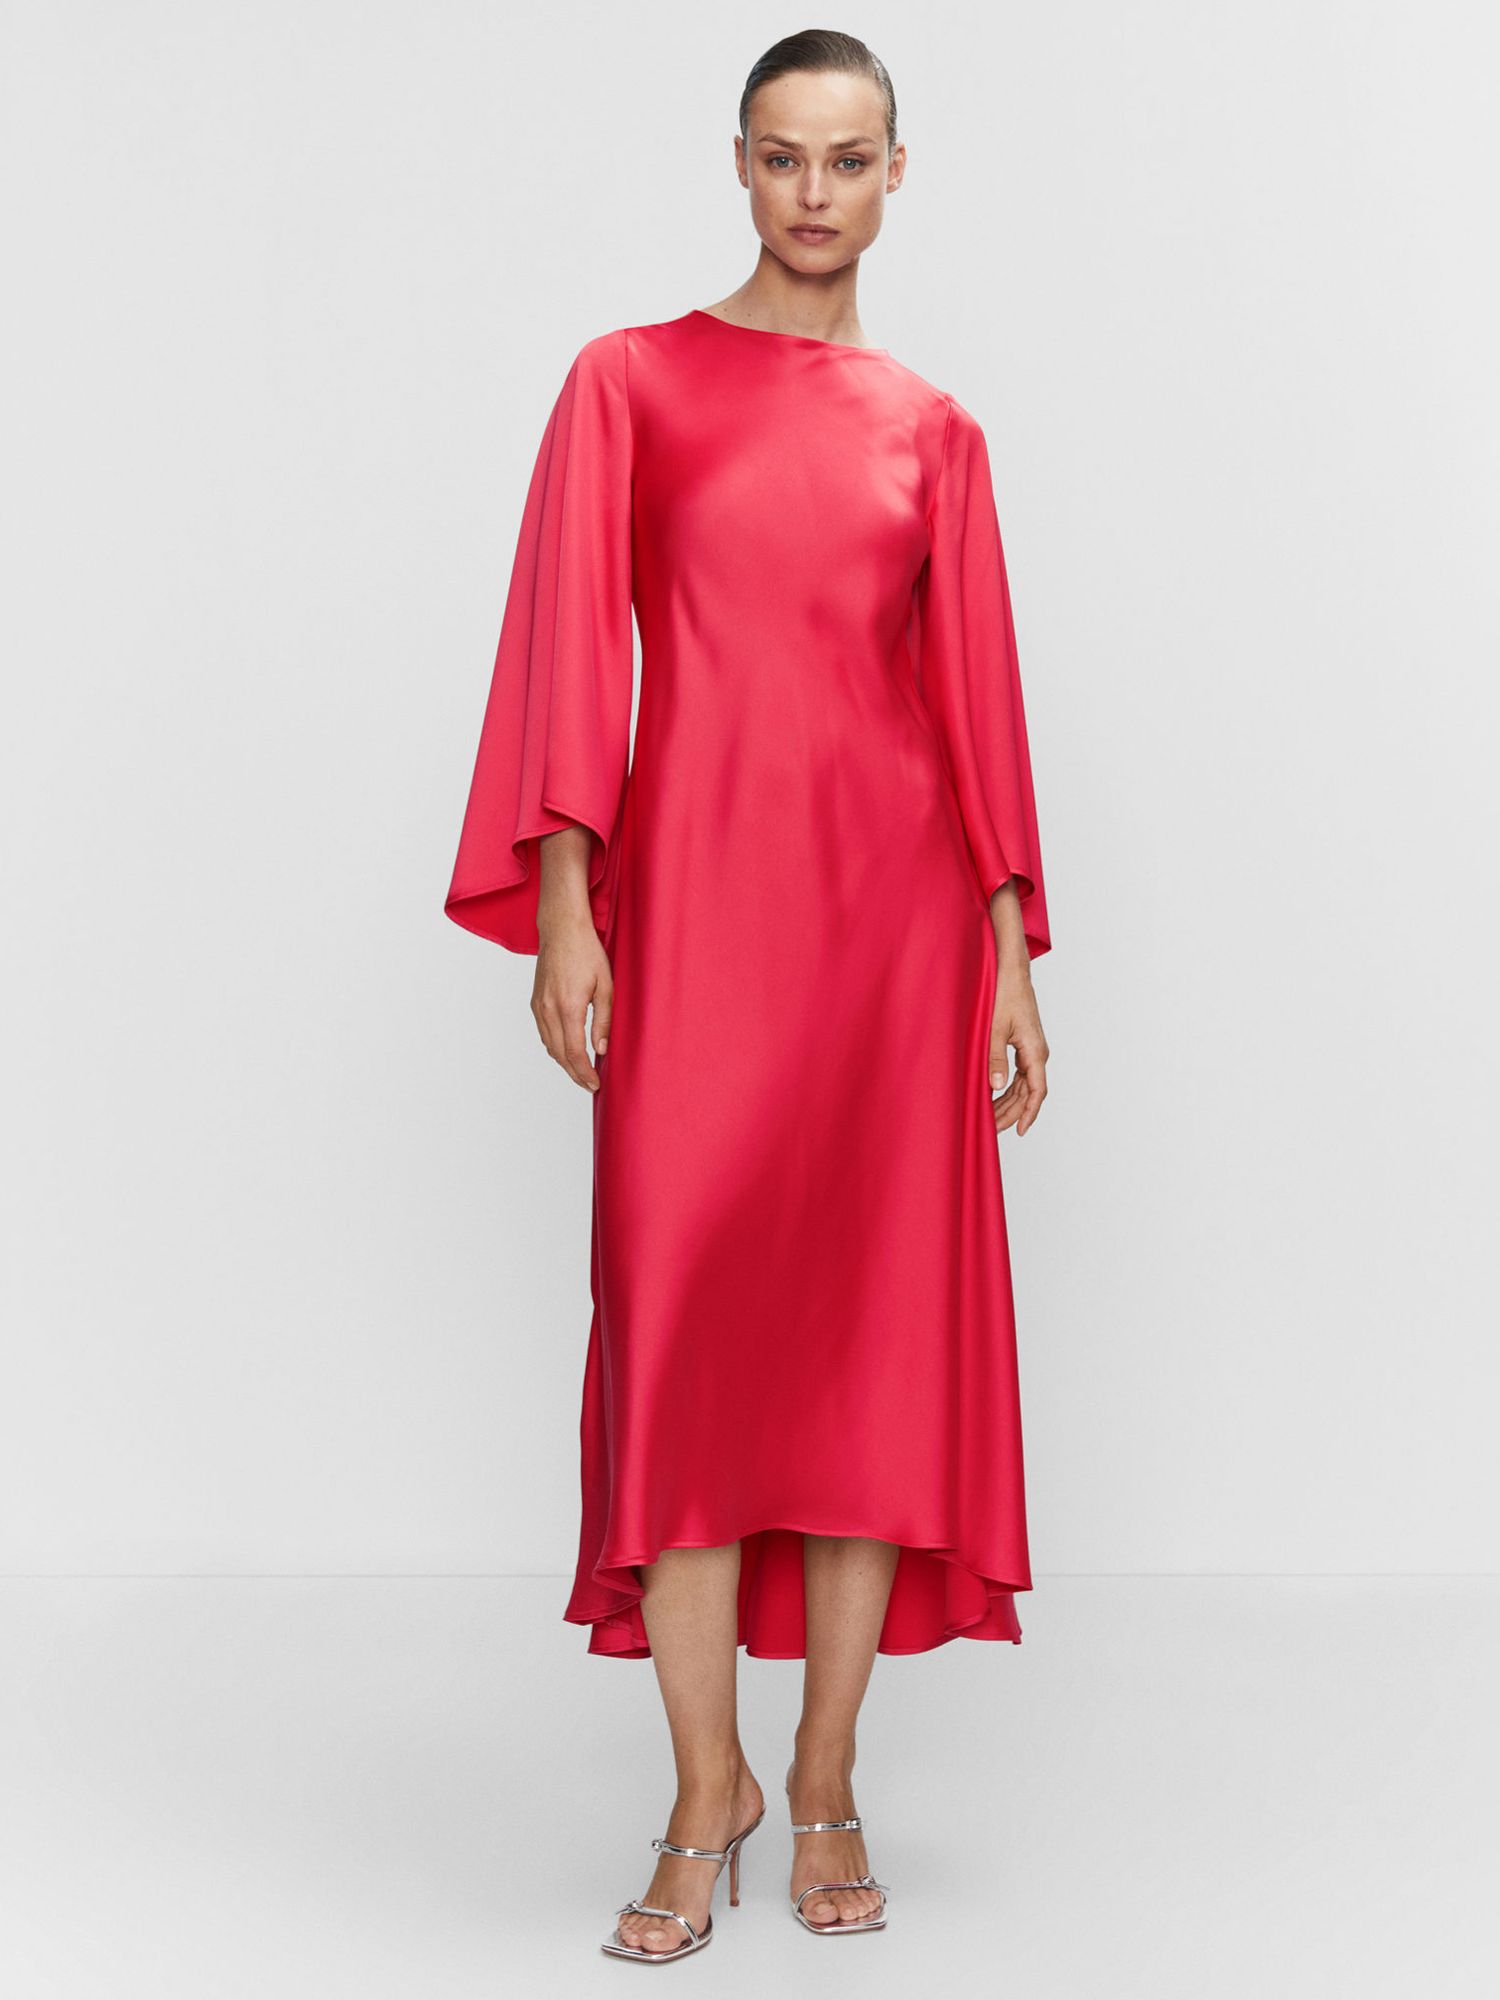 Mango Rosa Satin Midi Dress, Bright Red, 6